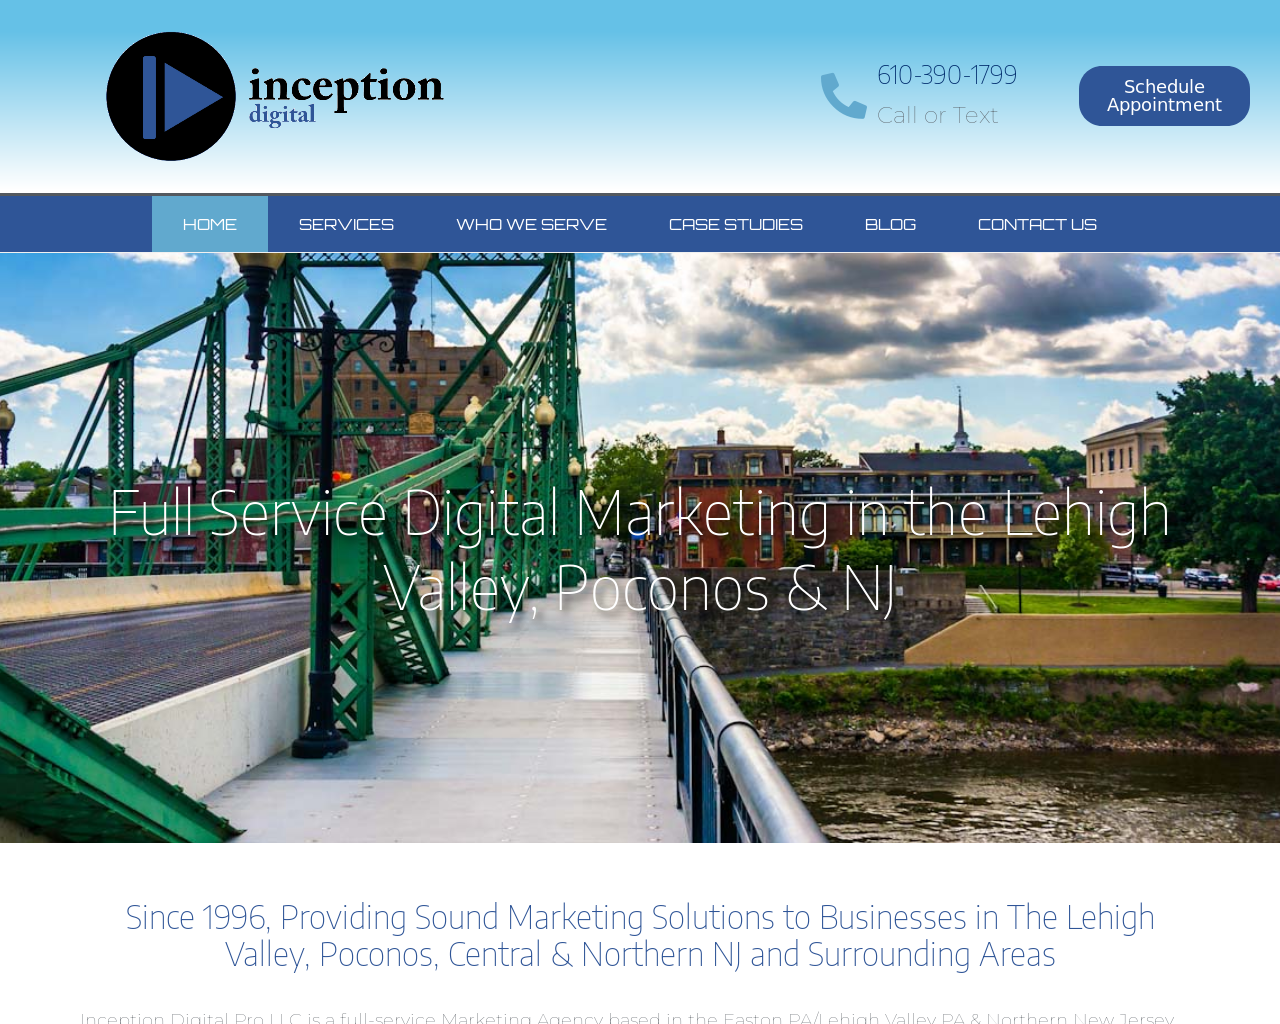 Inception Digital Pro